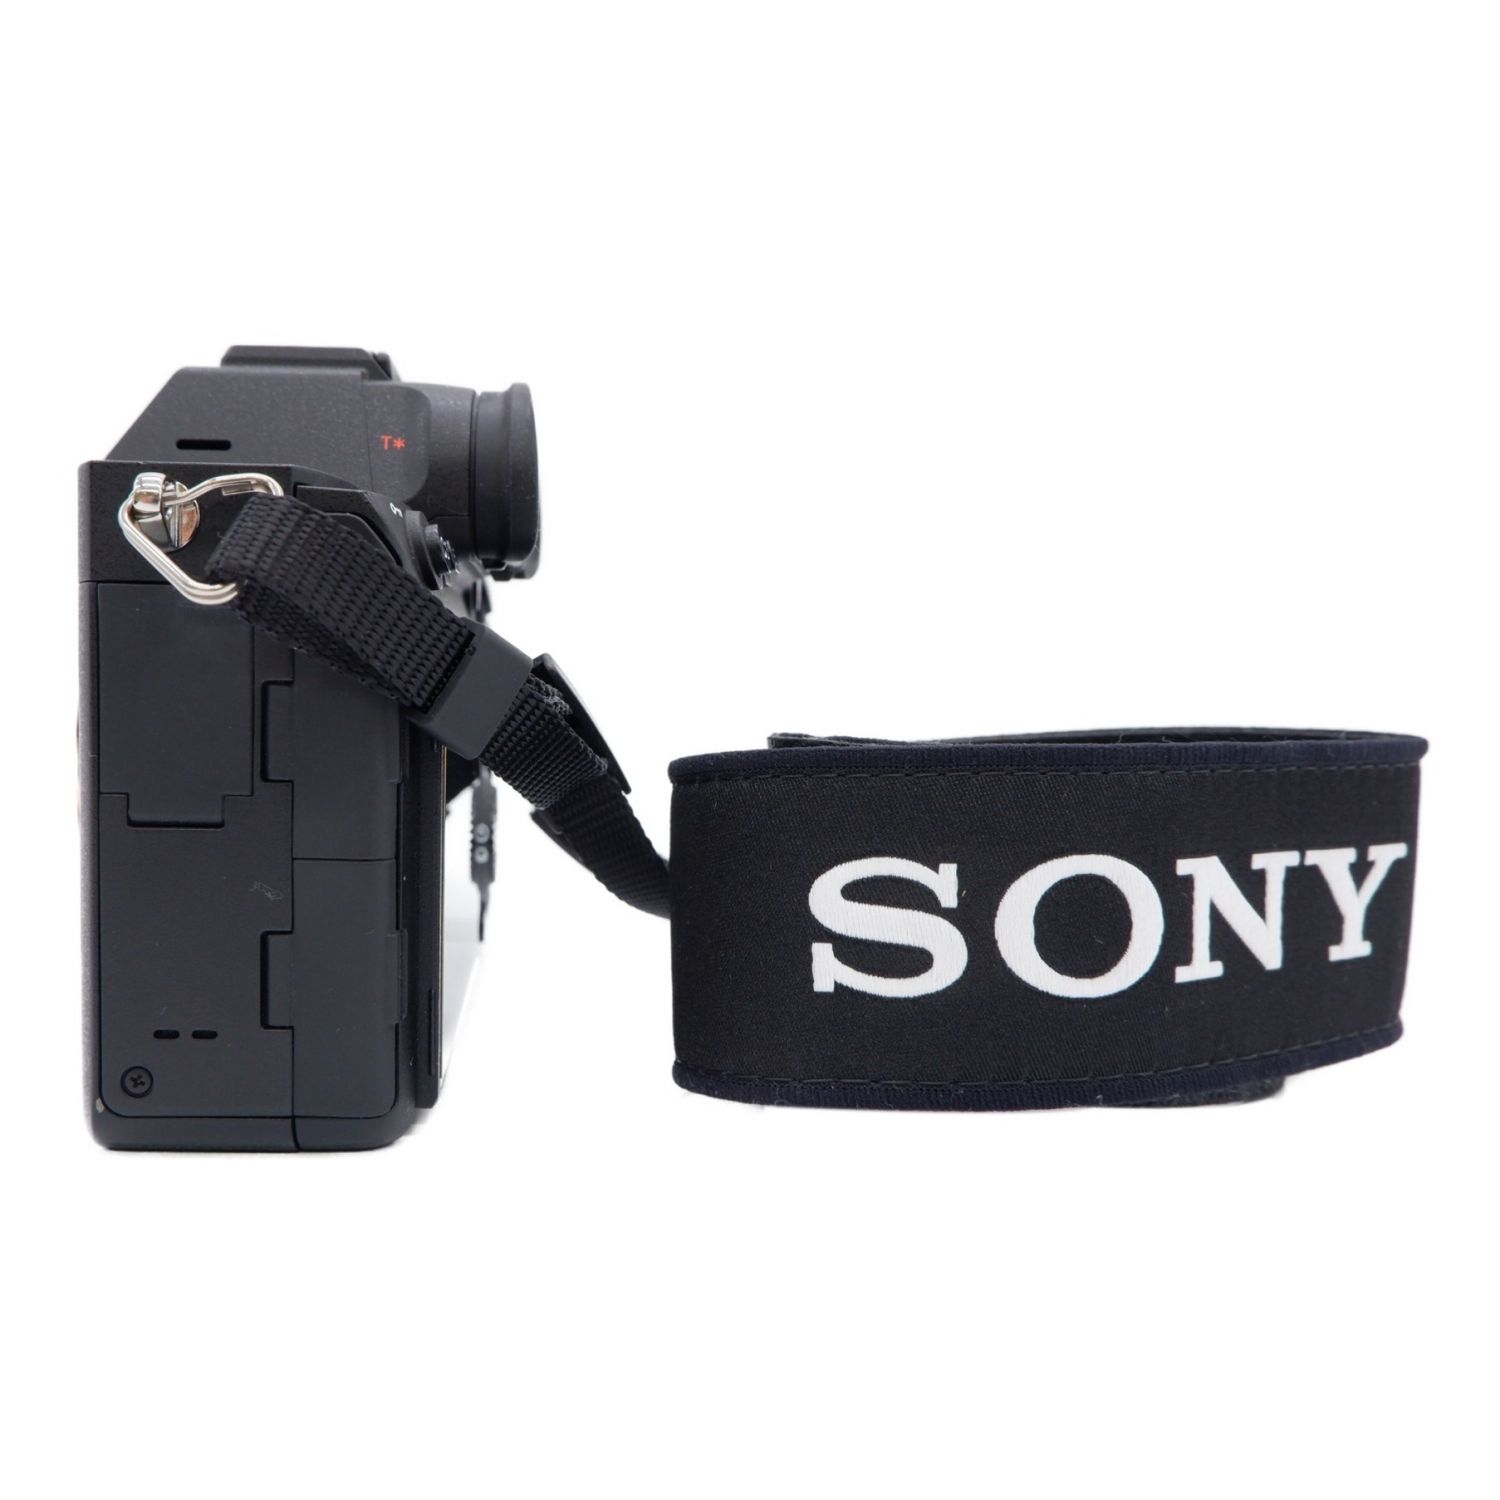 SONY (ソニー) デジタル一眼レフカメラ α7R IV ILCE-7RM4 6100万画素 